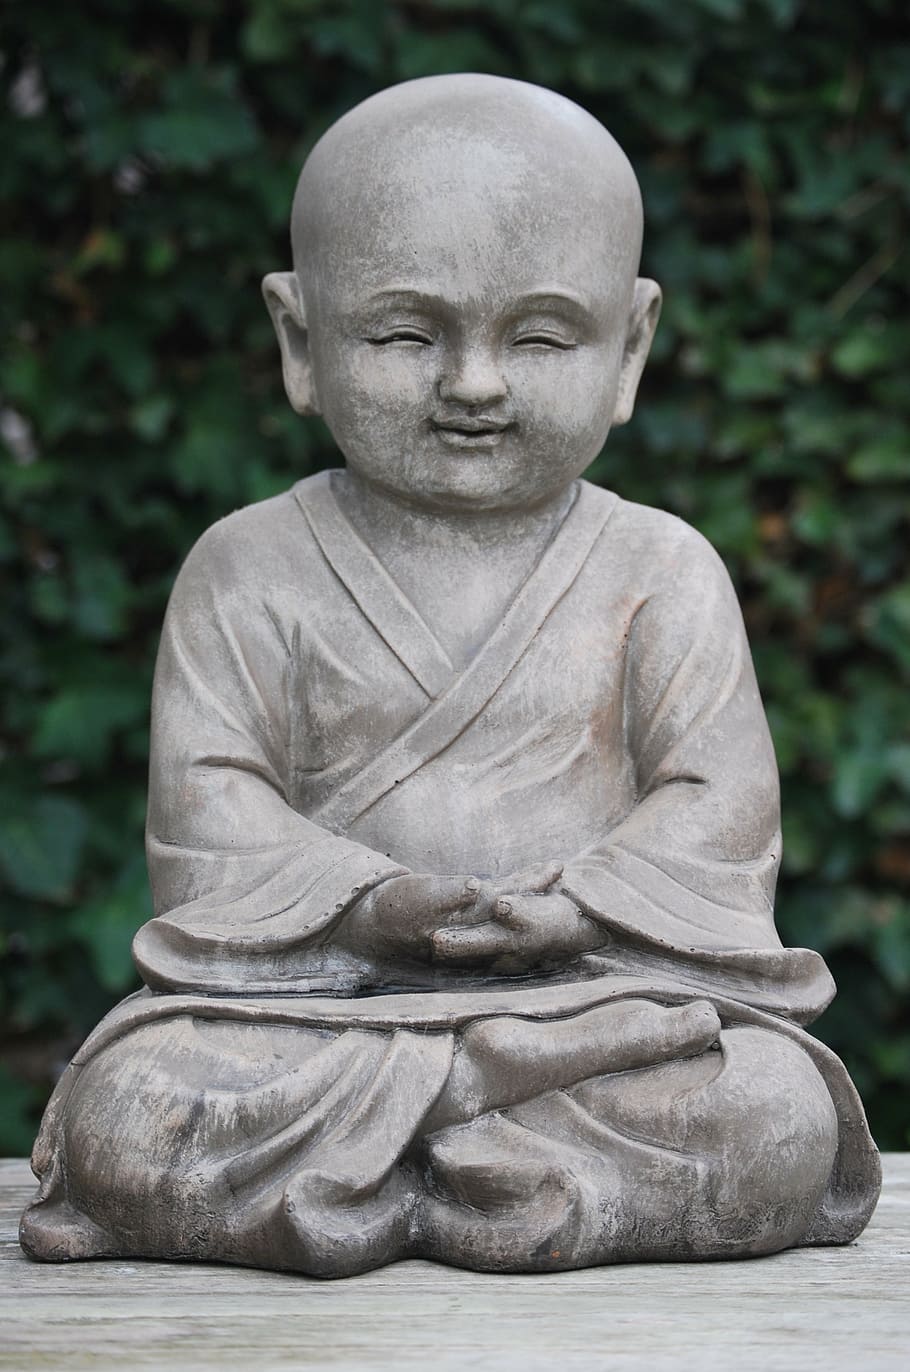 monk, lotus position statuette, buddha, meditation, faith, spirituality, rest, sitting, zen, statue